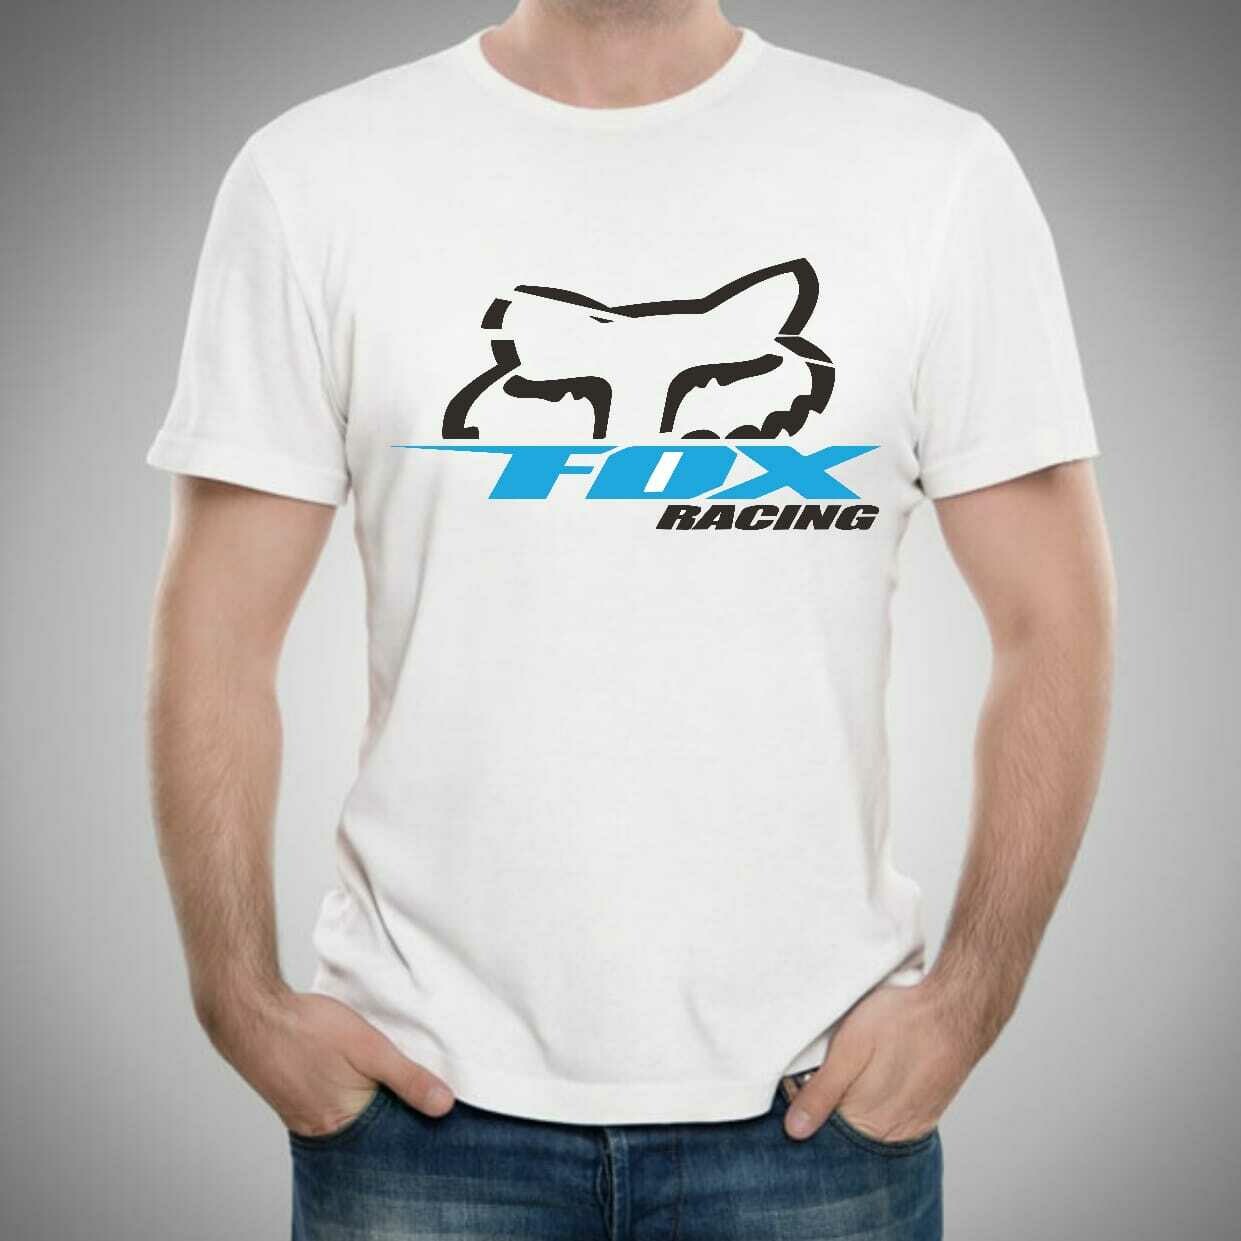 Camisetas FOX Racing